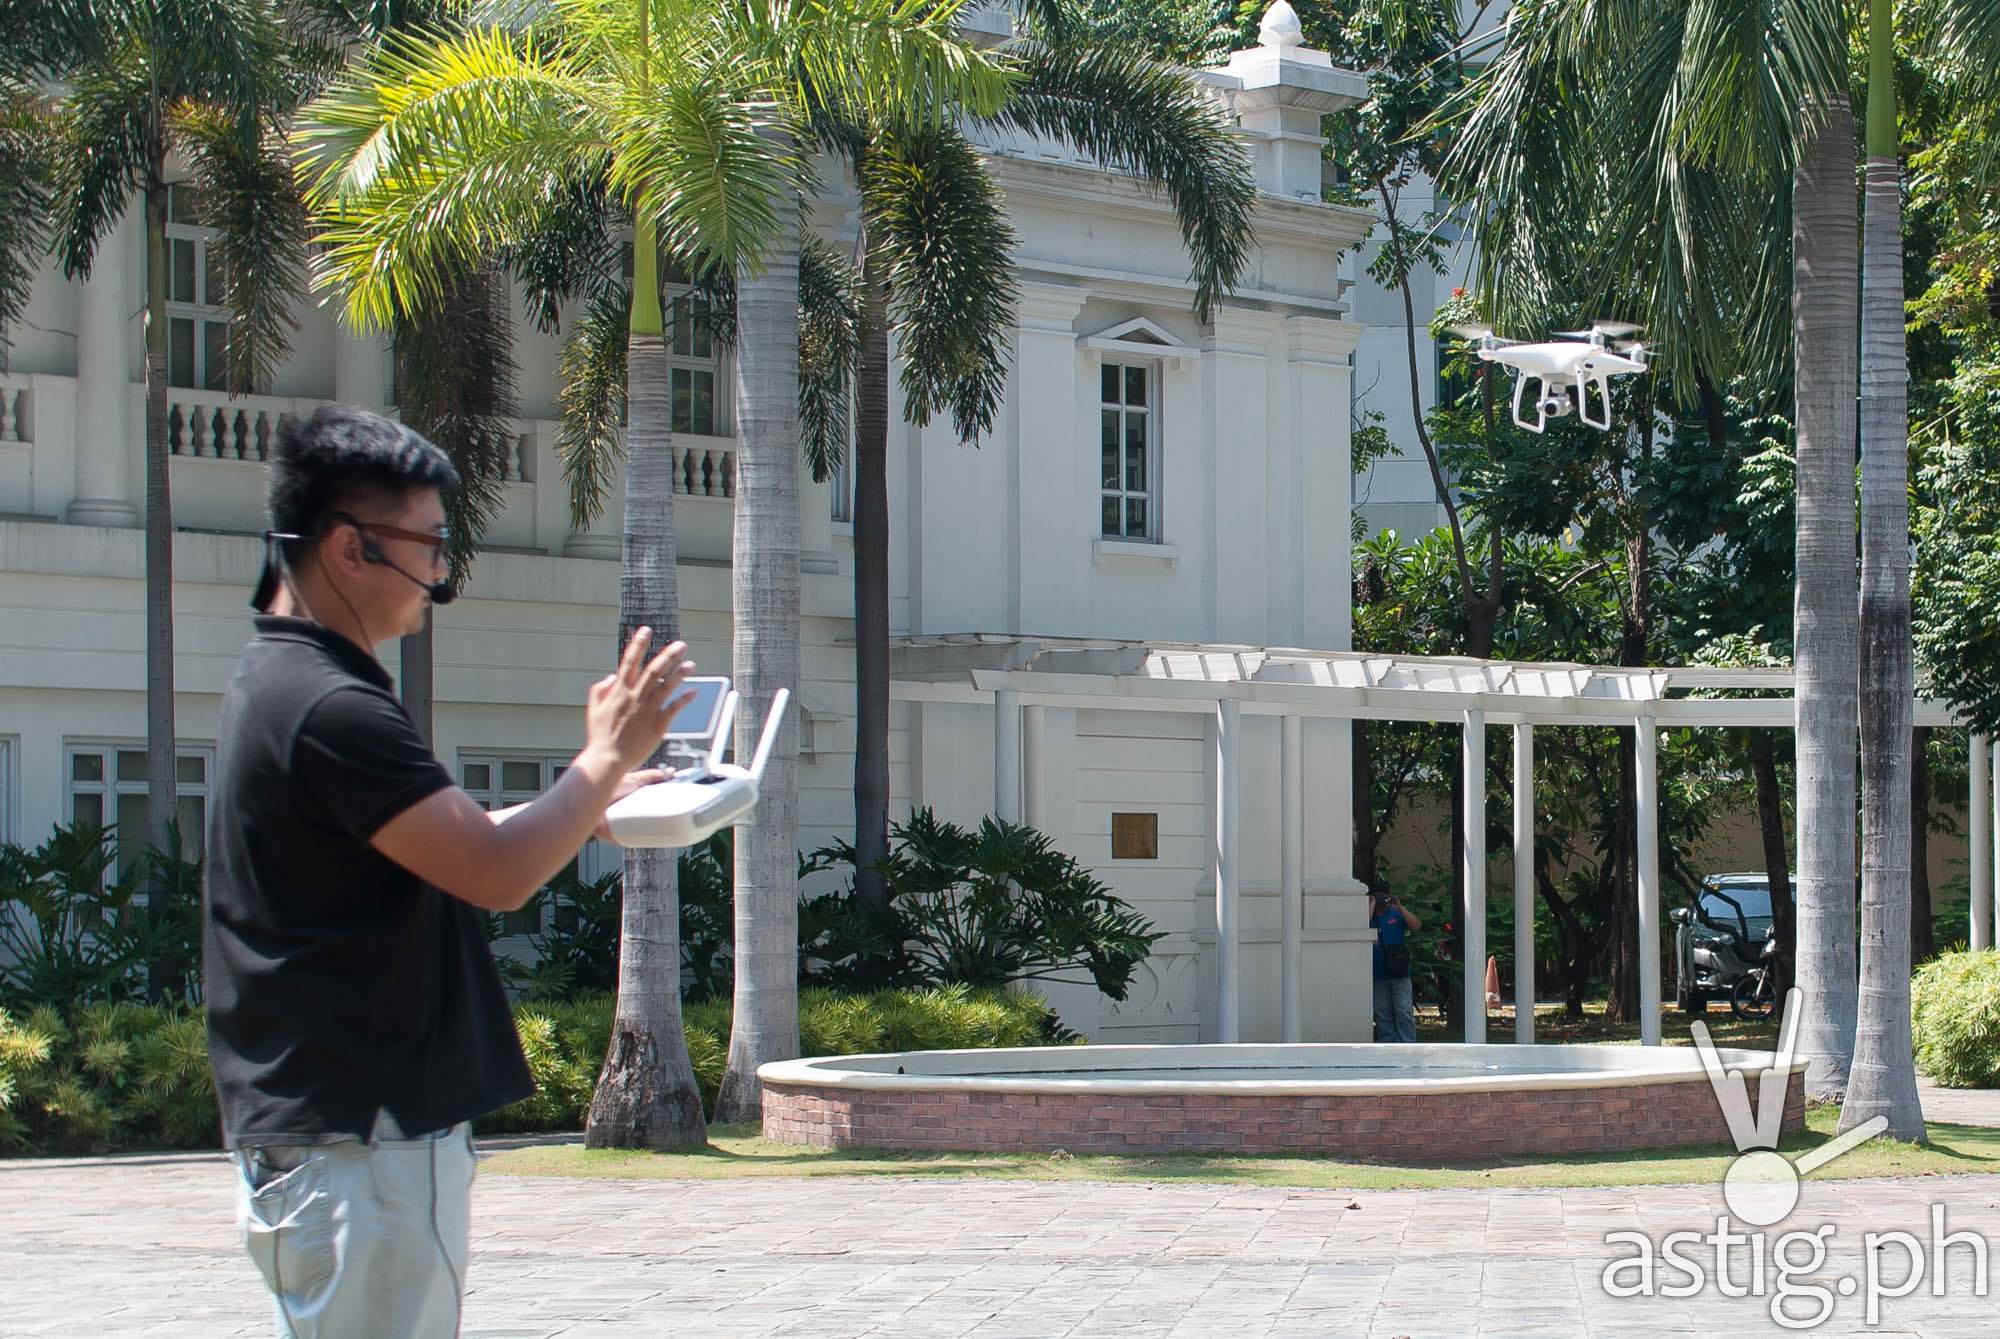 Demonstration of the DJI Phantom aerial drone